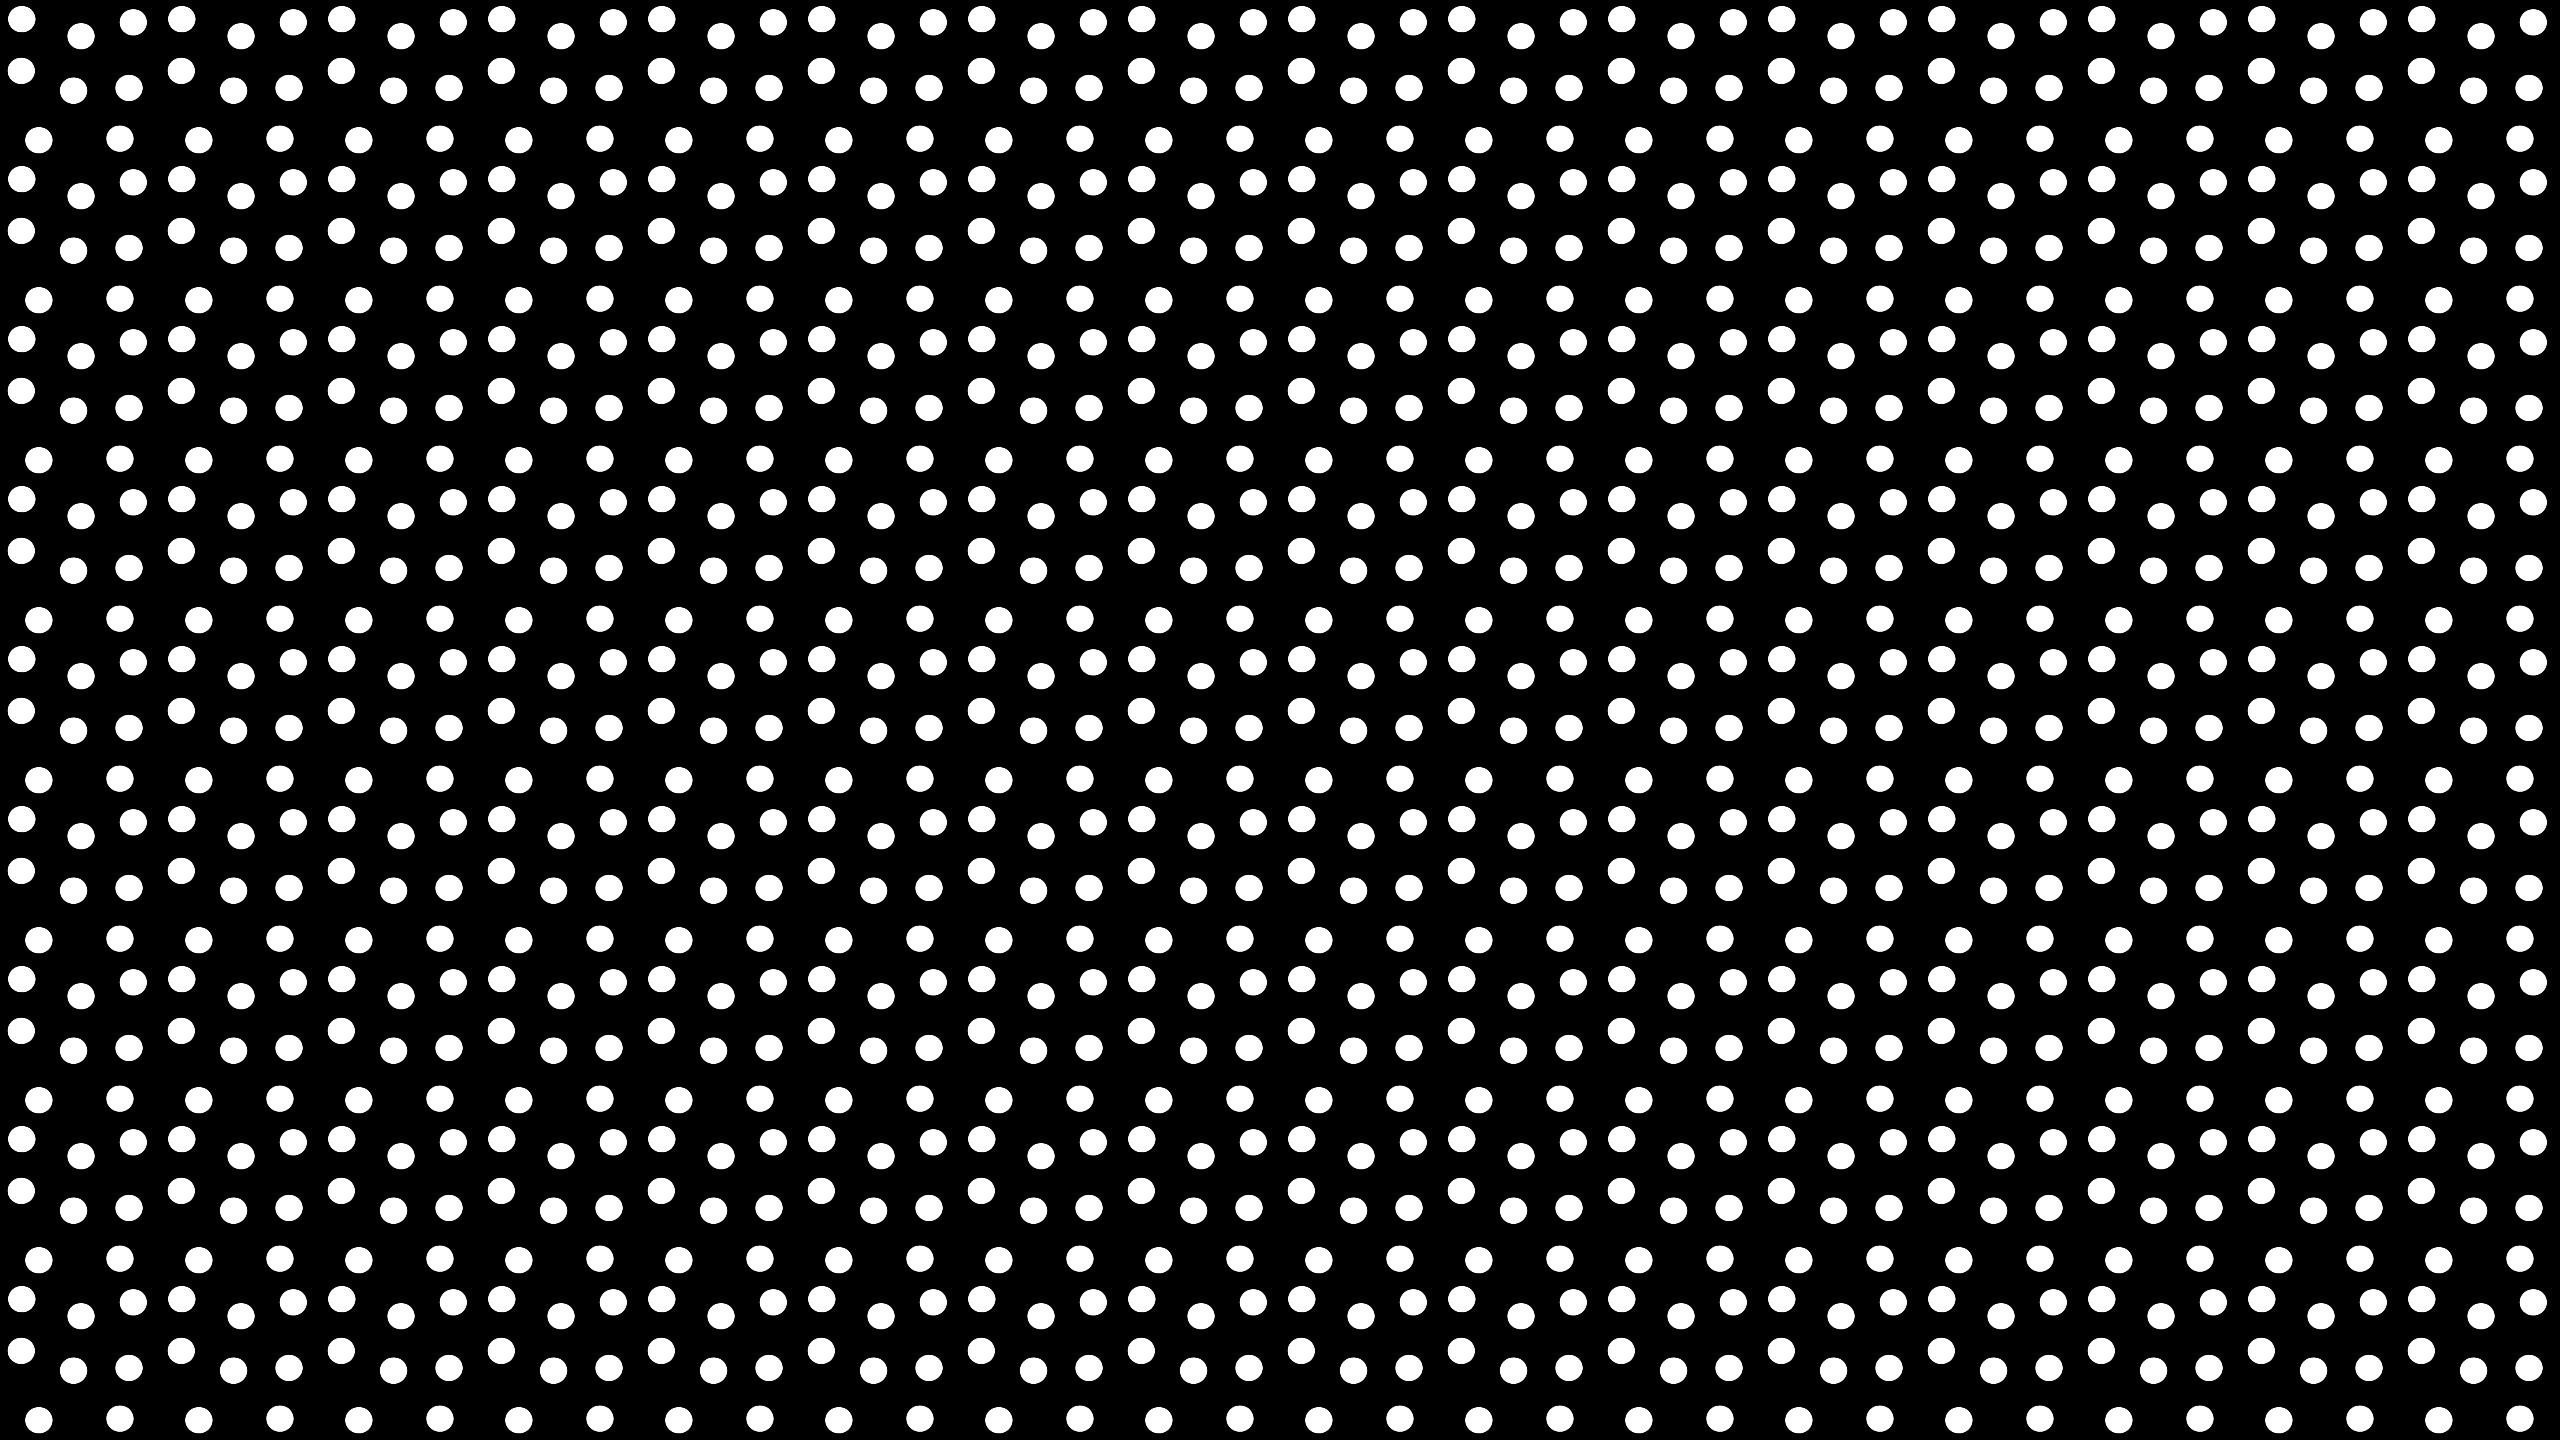 Black Polka Dots Desktop Wallpaper is easy. Just save the wallpaper .